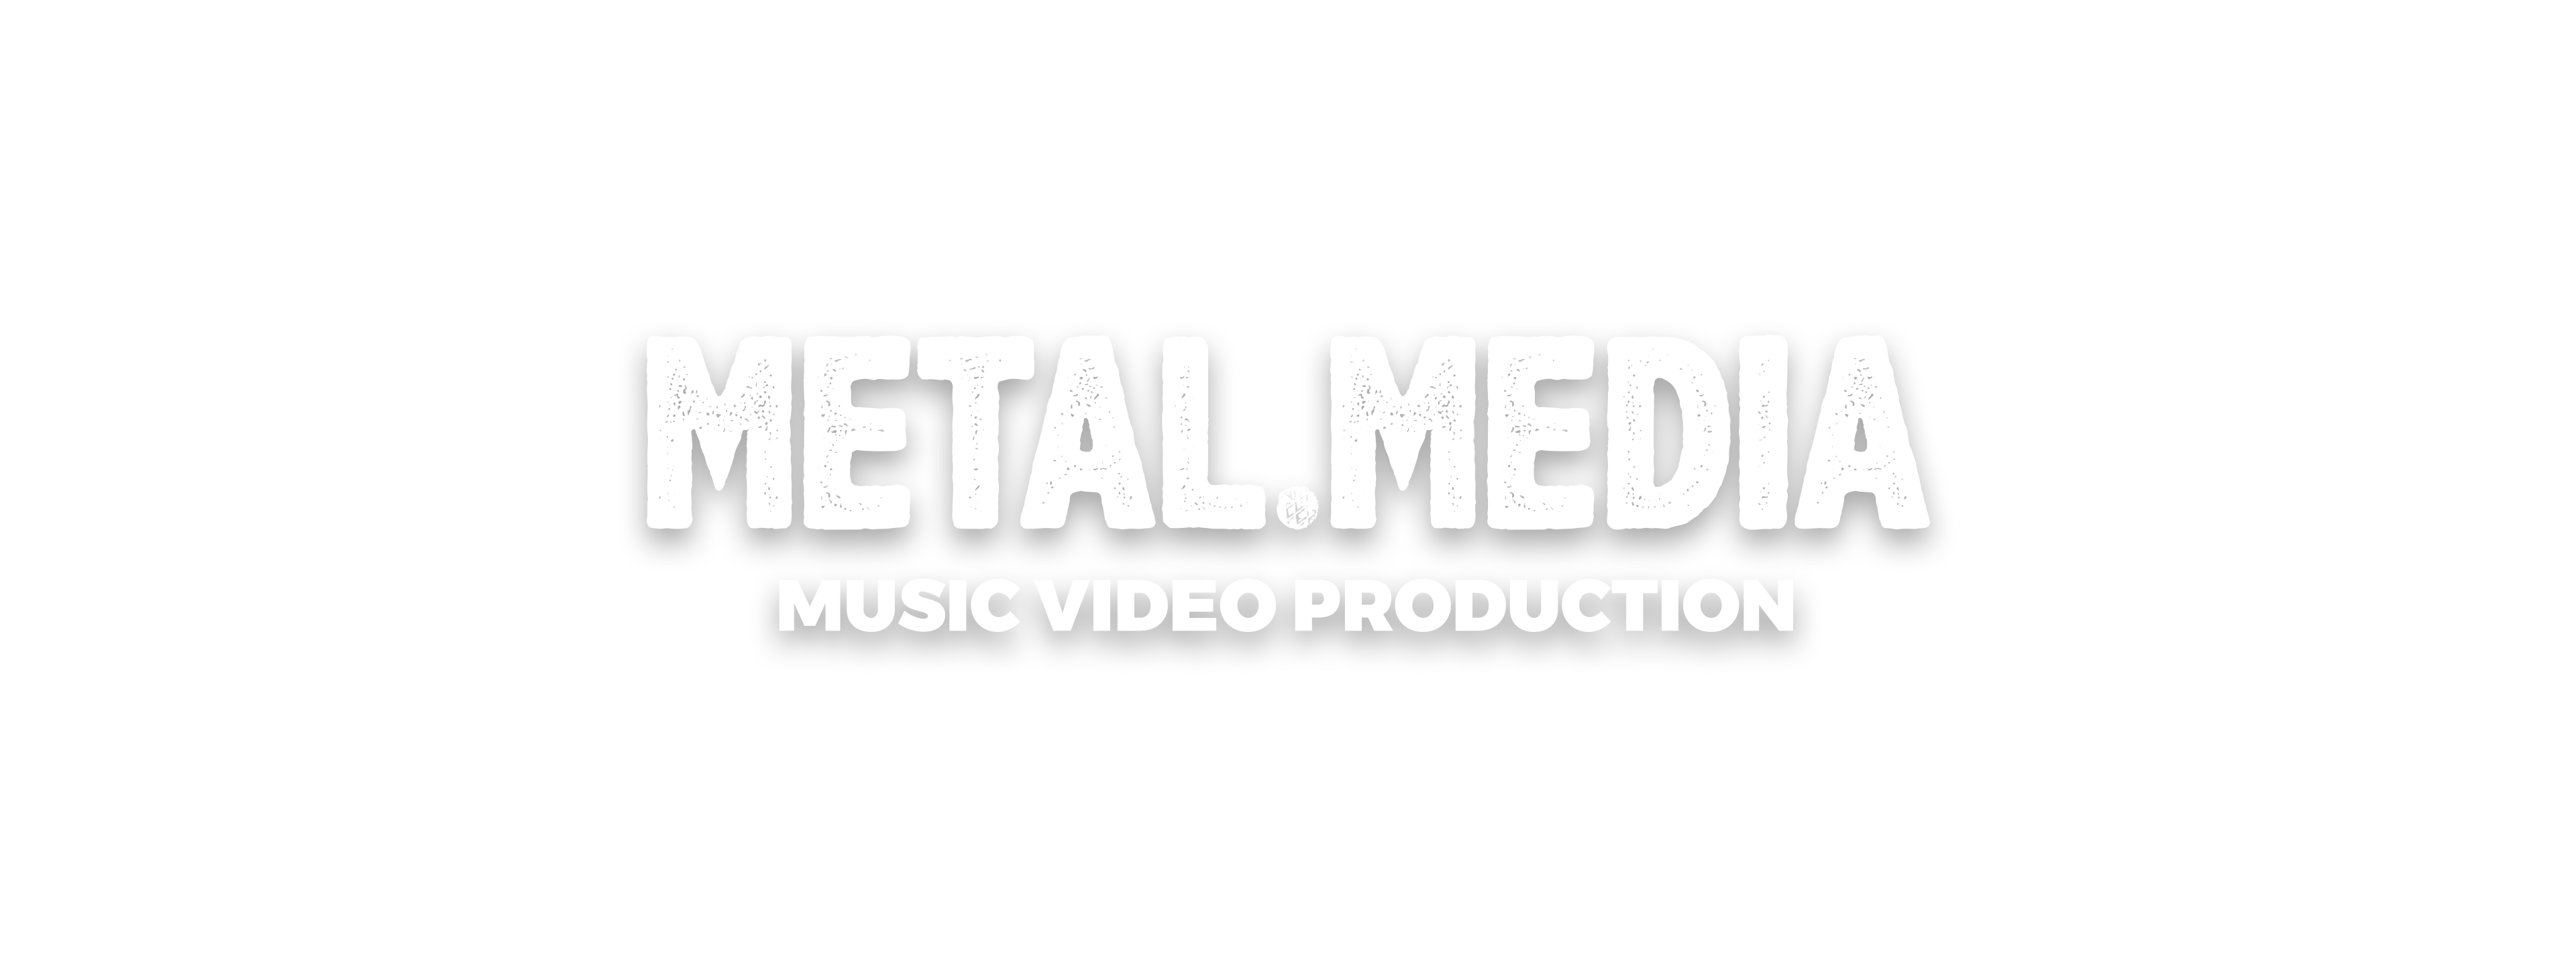 Metal Media - Music video production